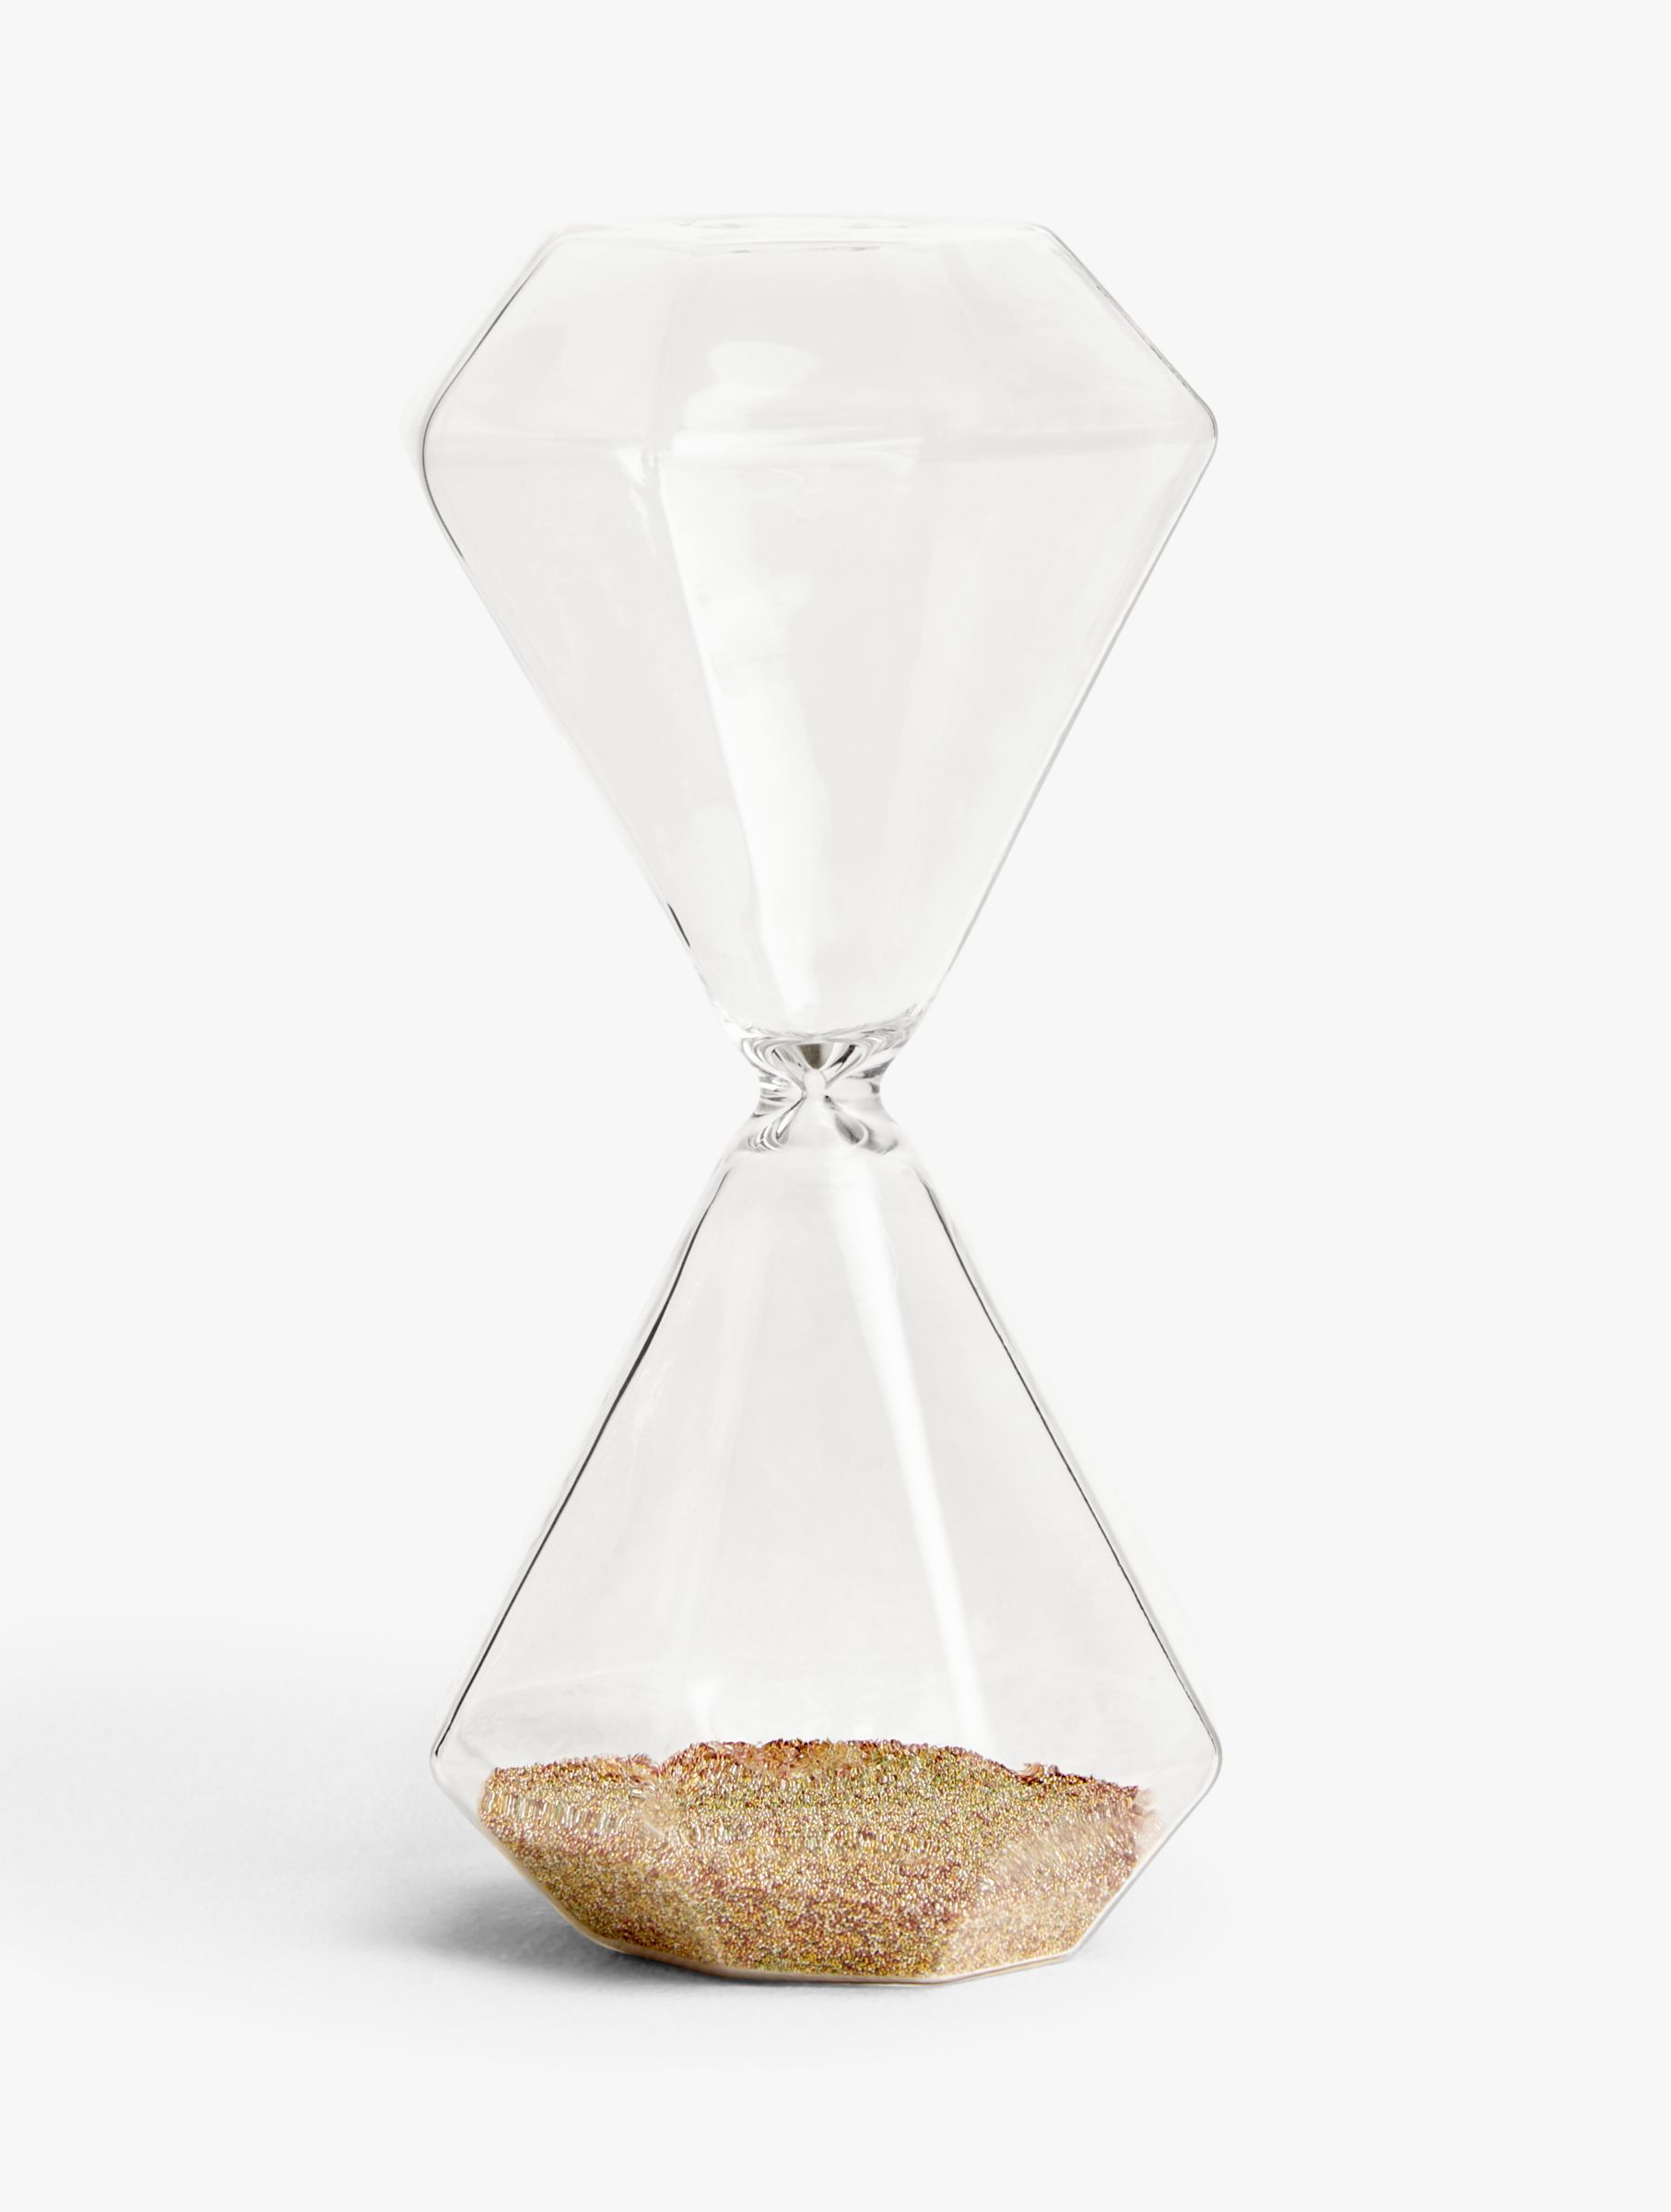 buy hourglass timer